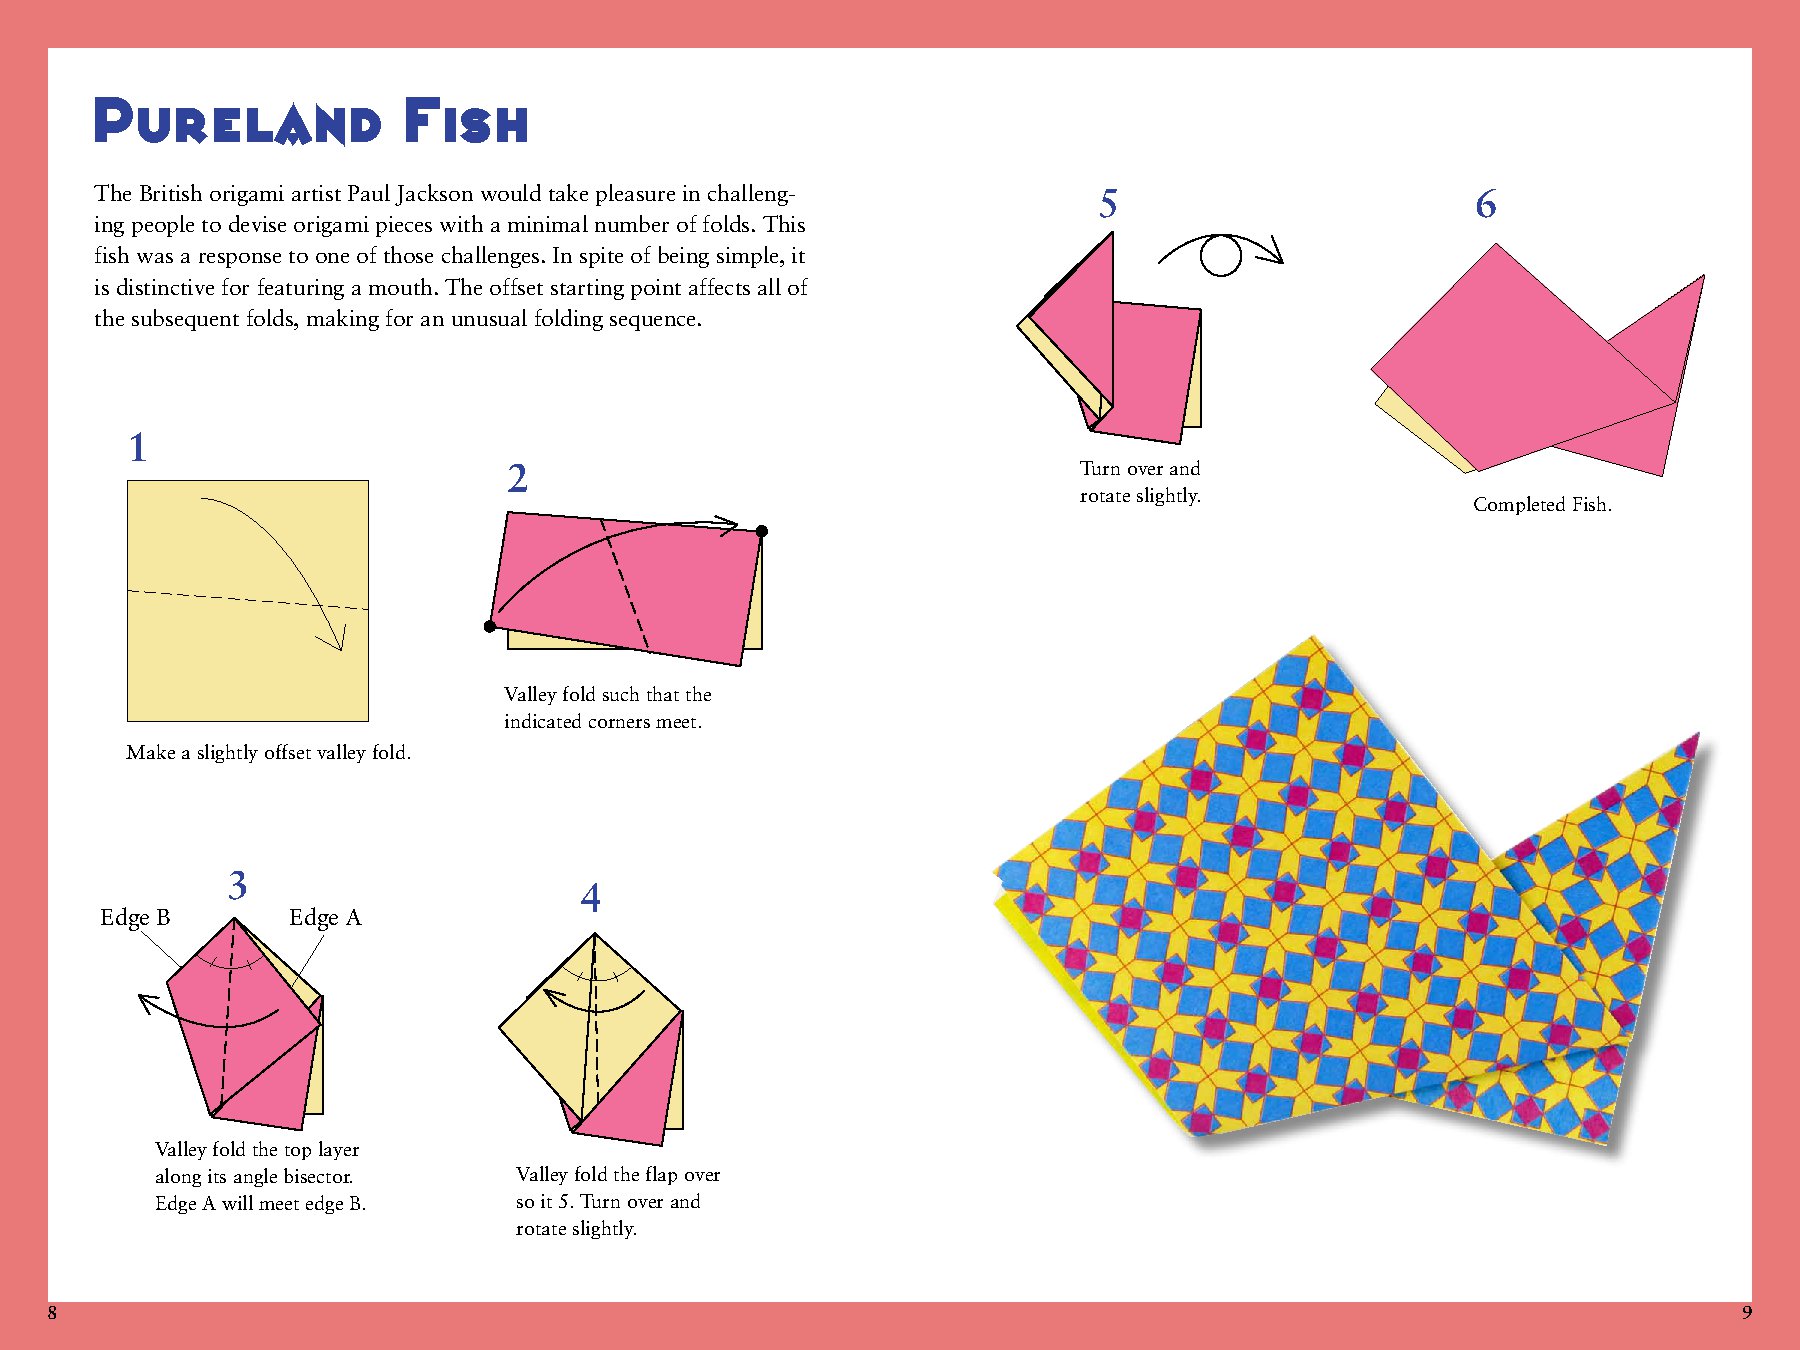 Creative Origami Kit